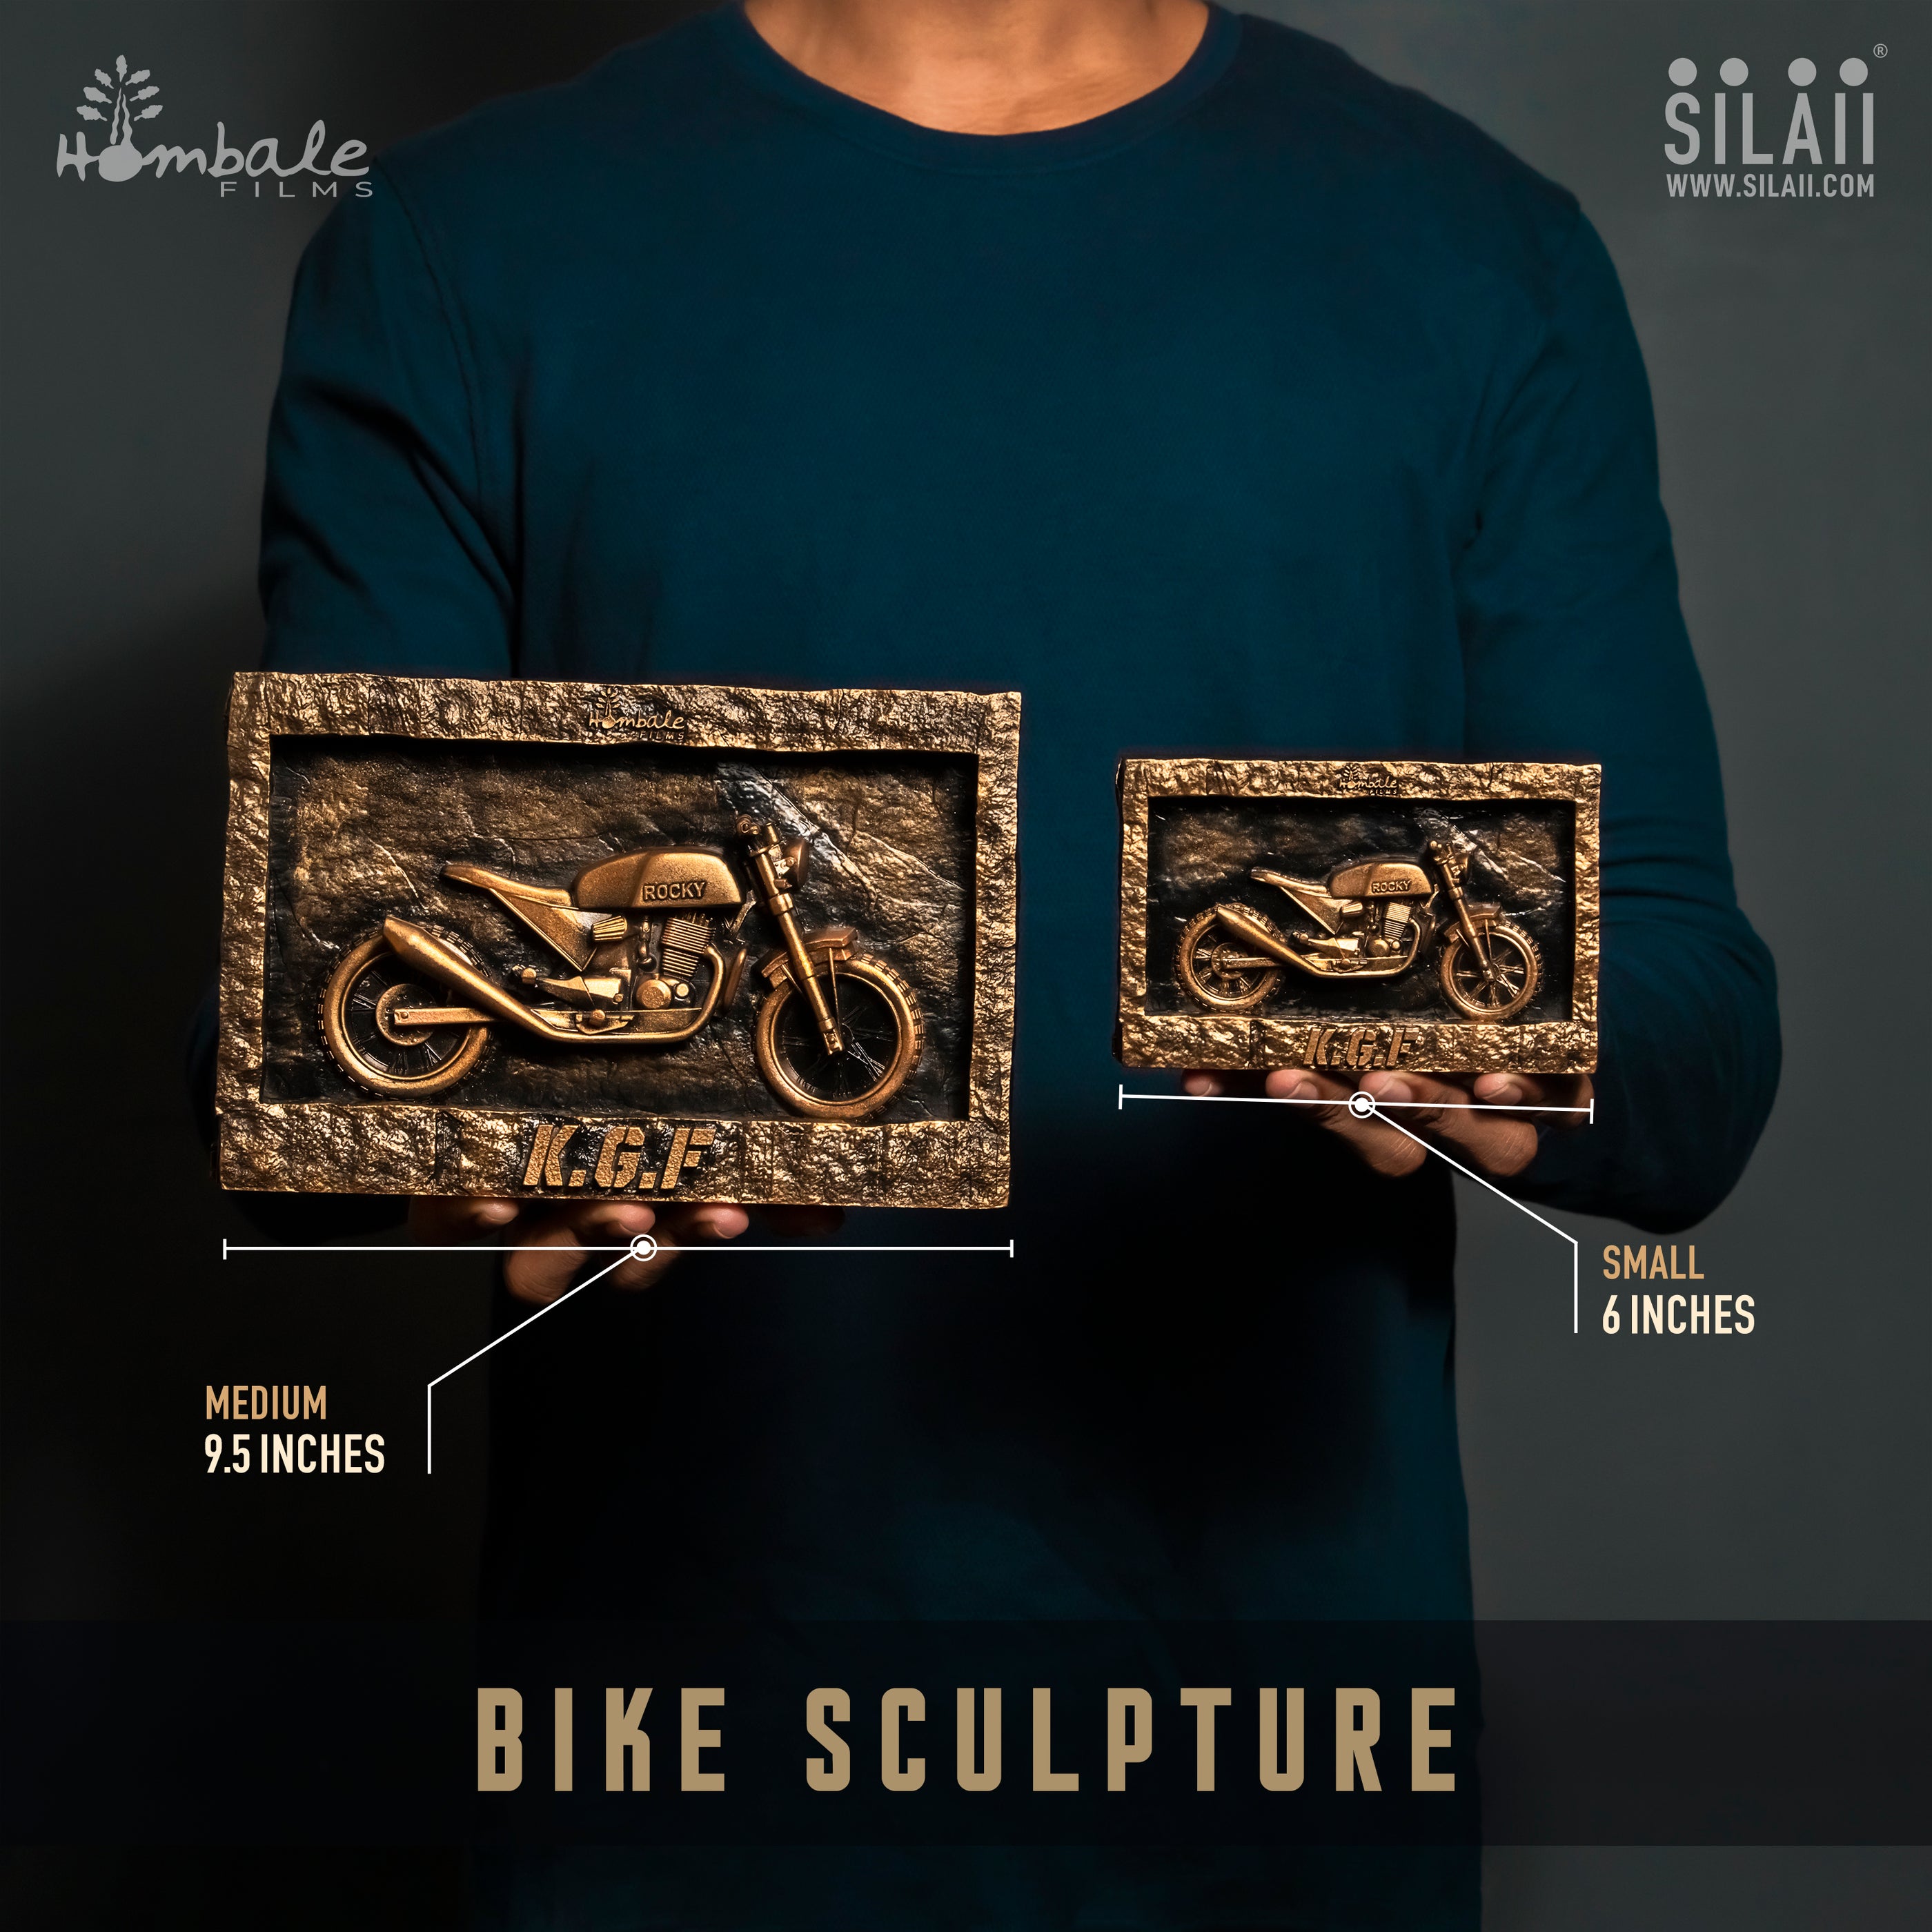 Bike Sculpture from KGF Universe